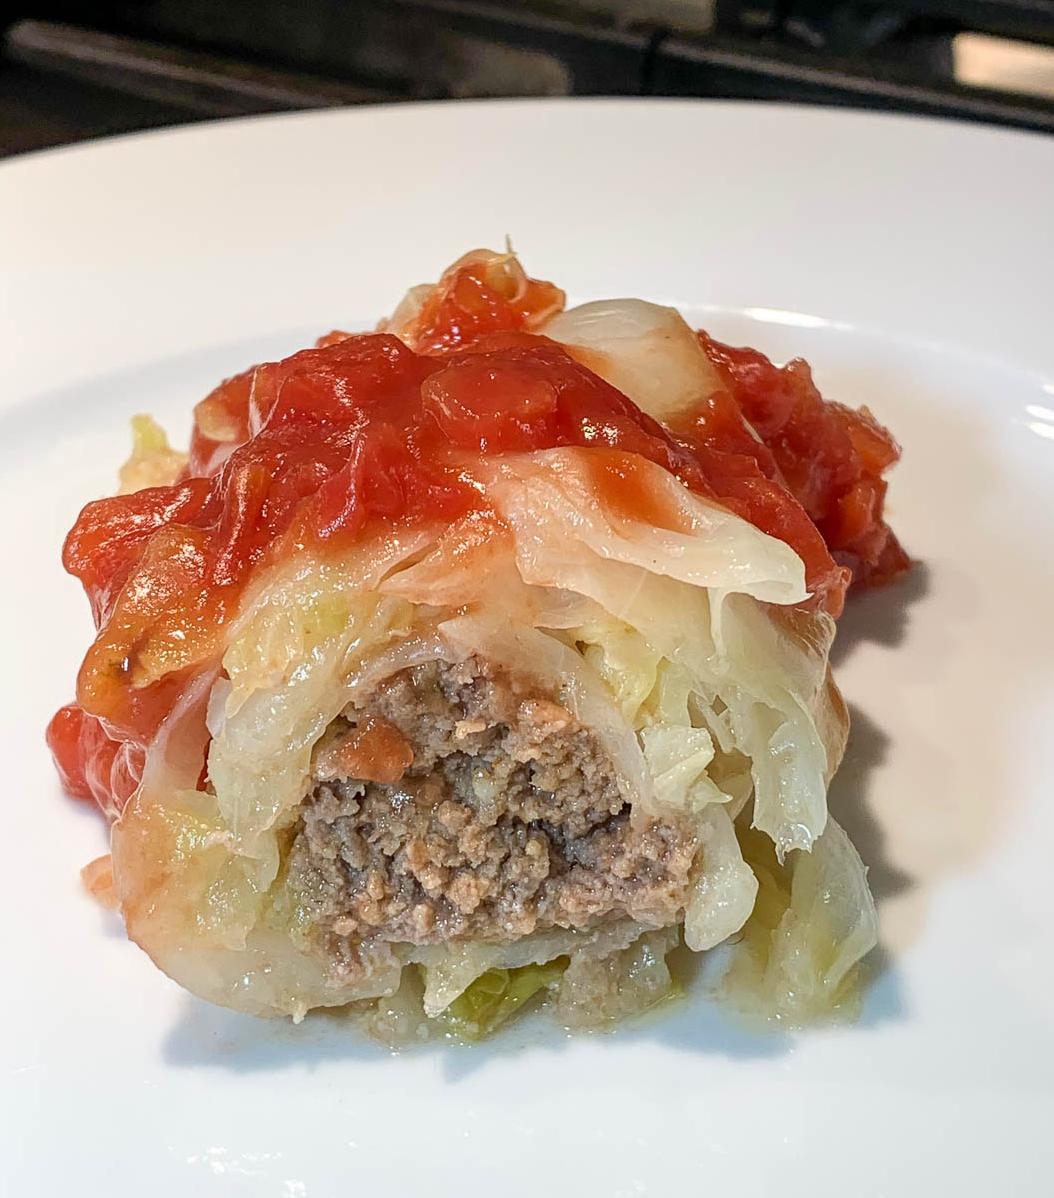  These cabbage rolls will make your taste buds dance an Irish jig!